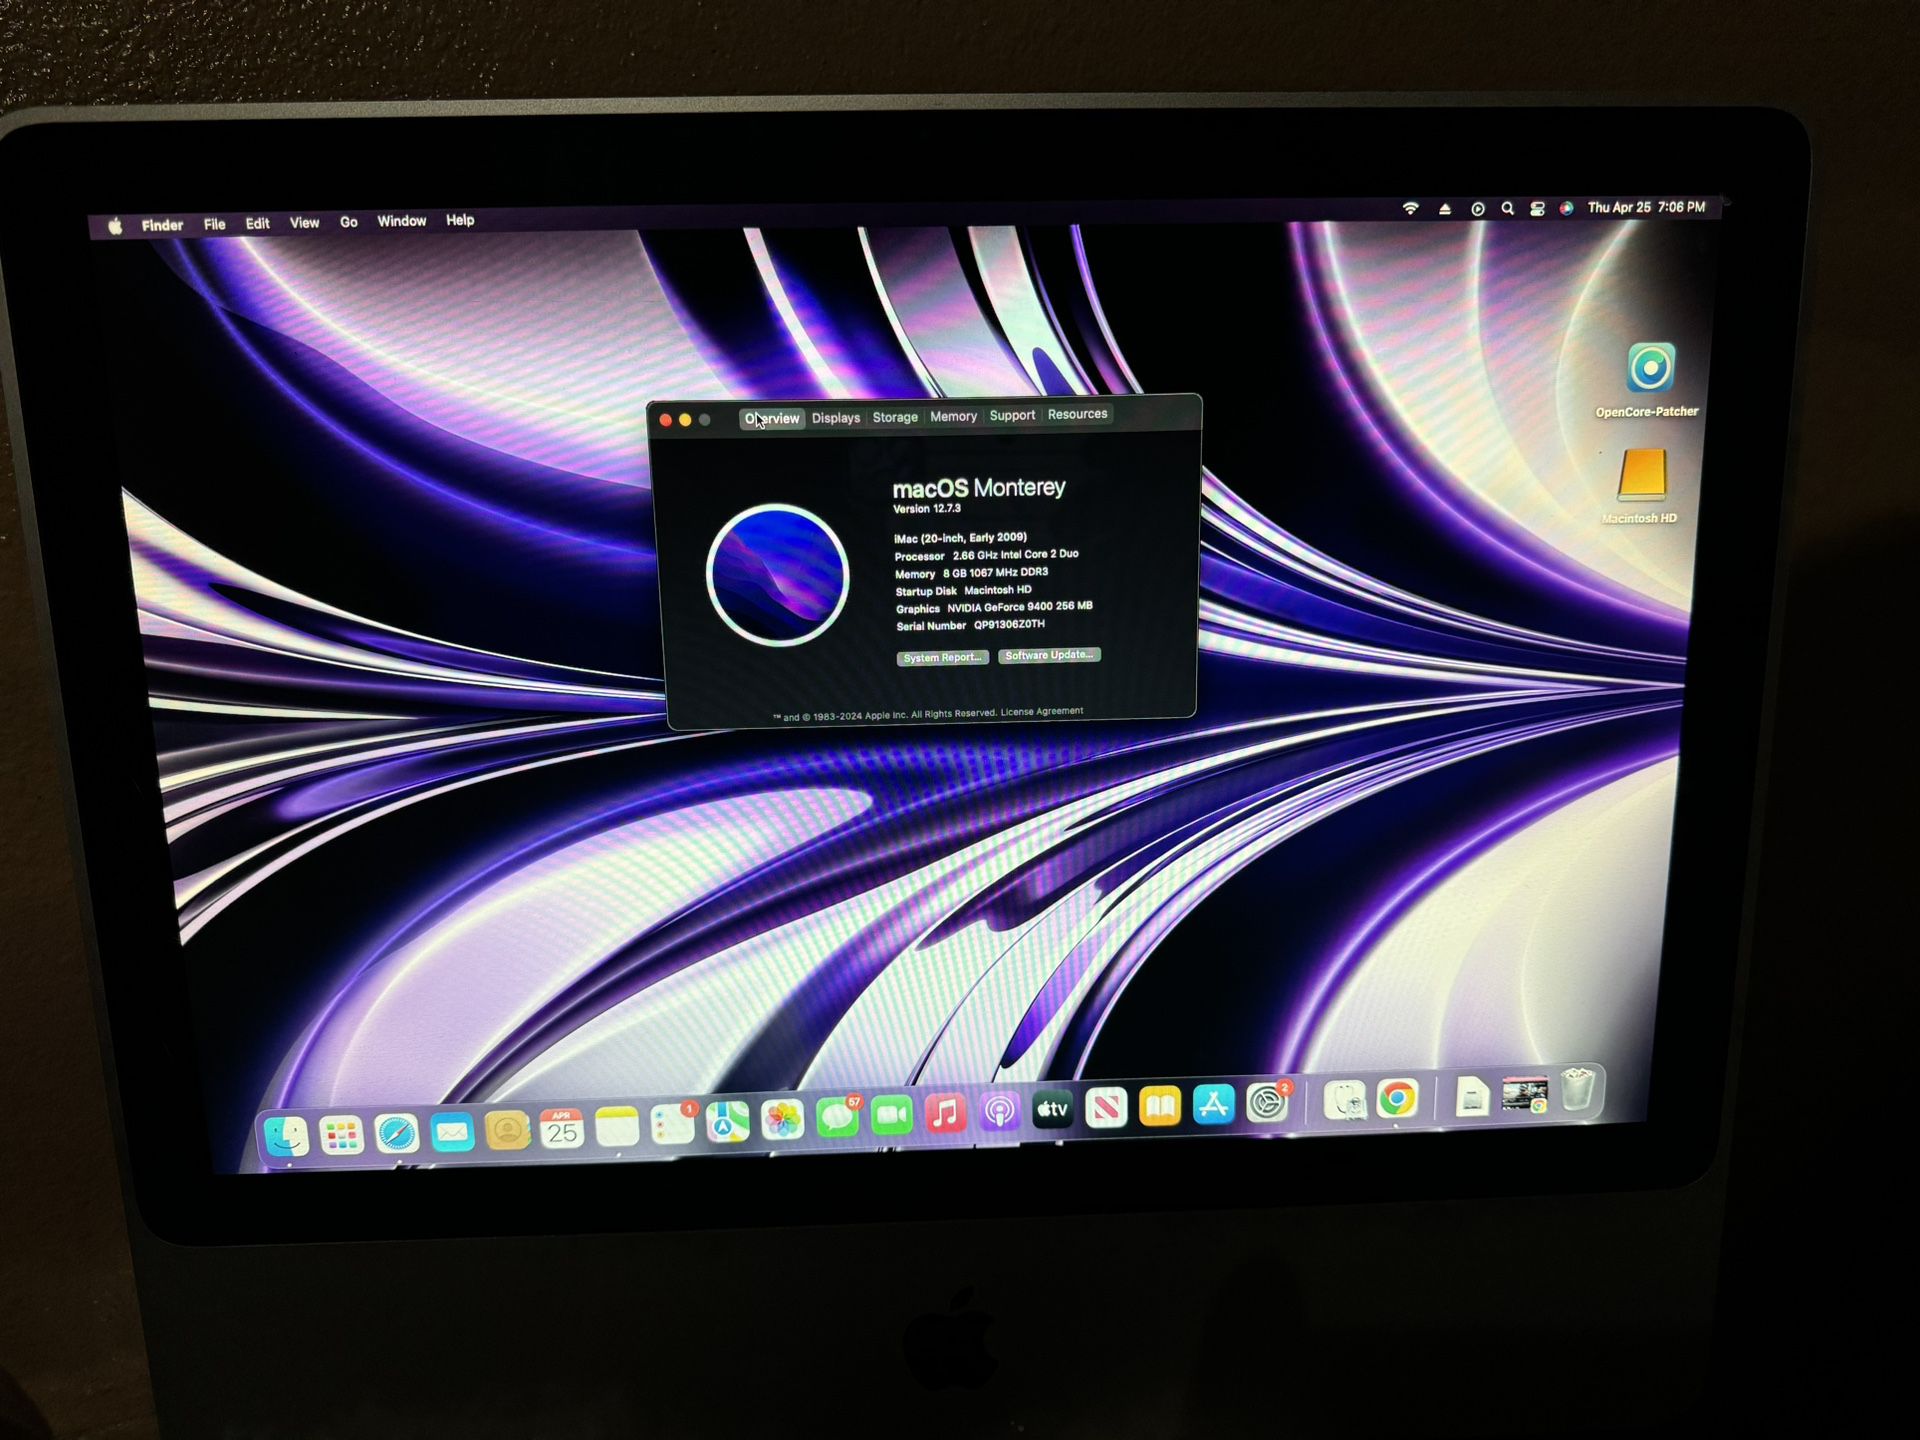 iMac (20-inch, Early 2009)